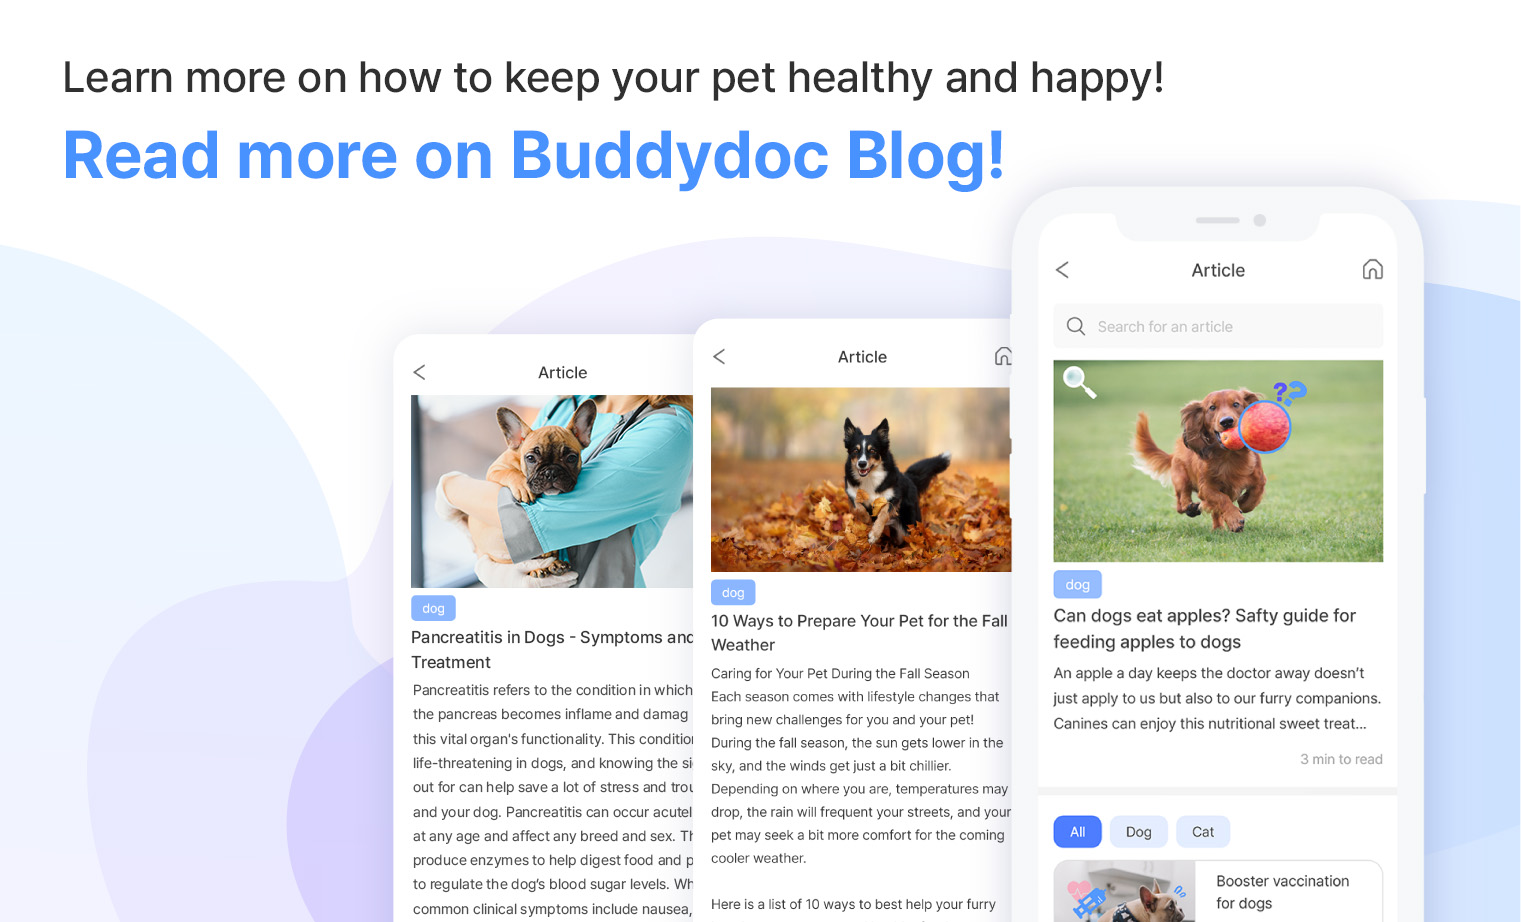 Buddydoc blog info sheet